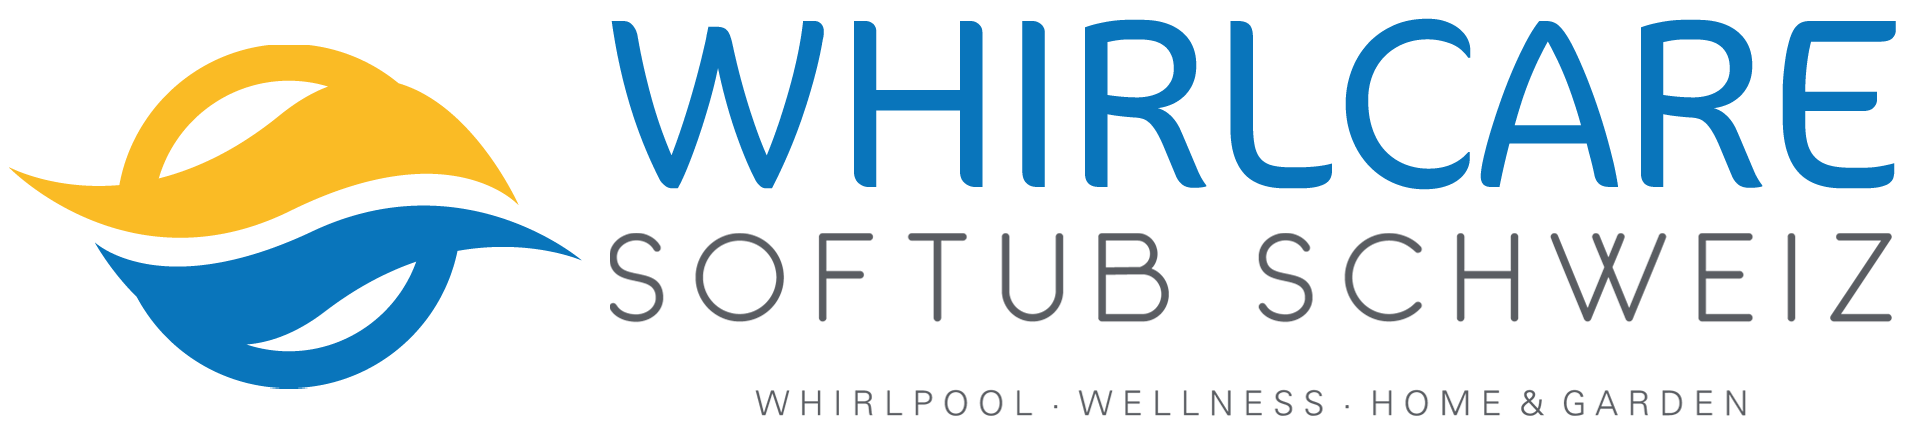 Whirlcare Whirlpool Swim-Spa Softub Schweiz